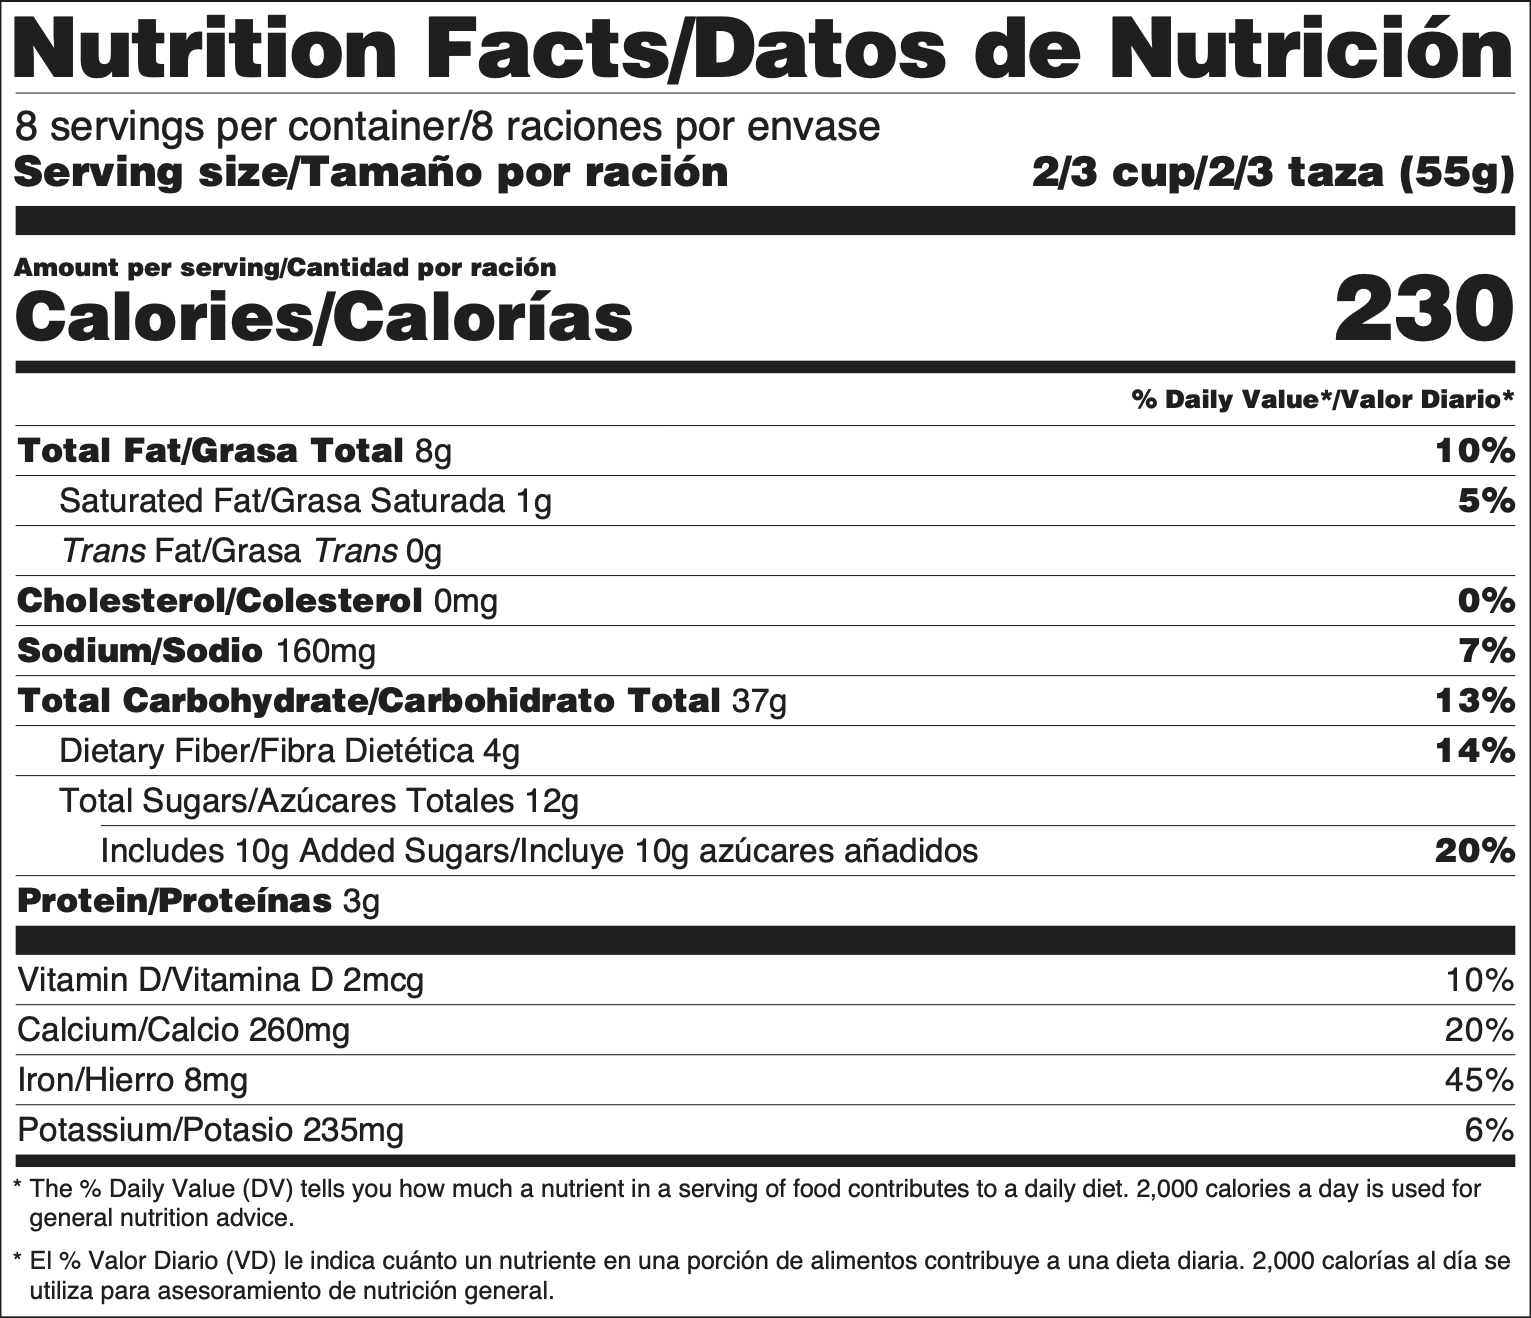 English/Spanish Bilingual Nutrition Facts Label